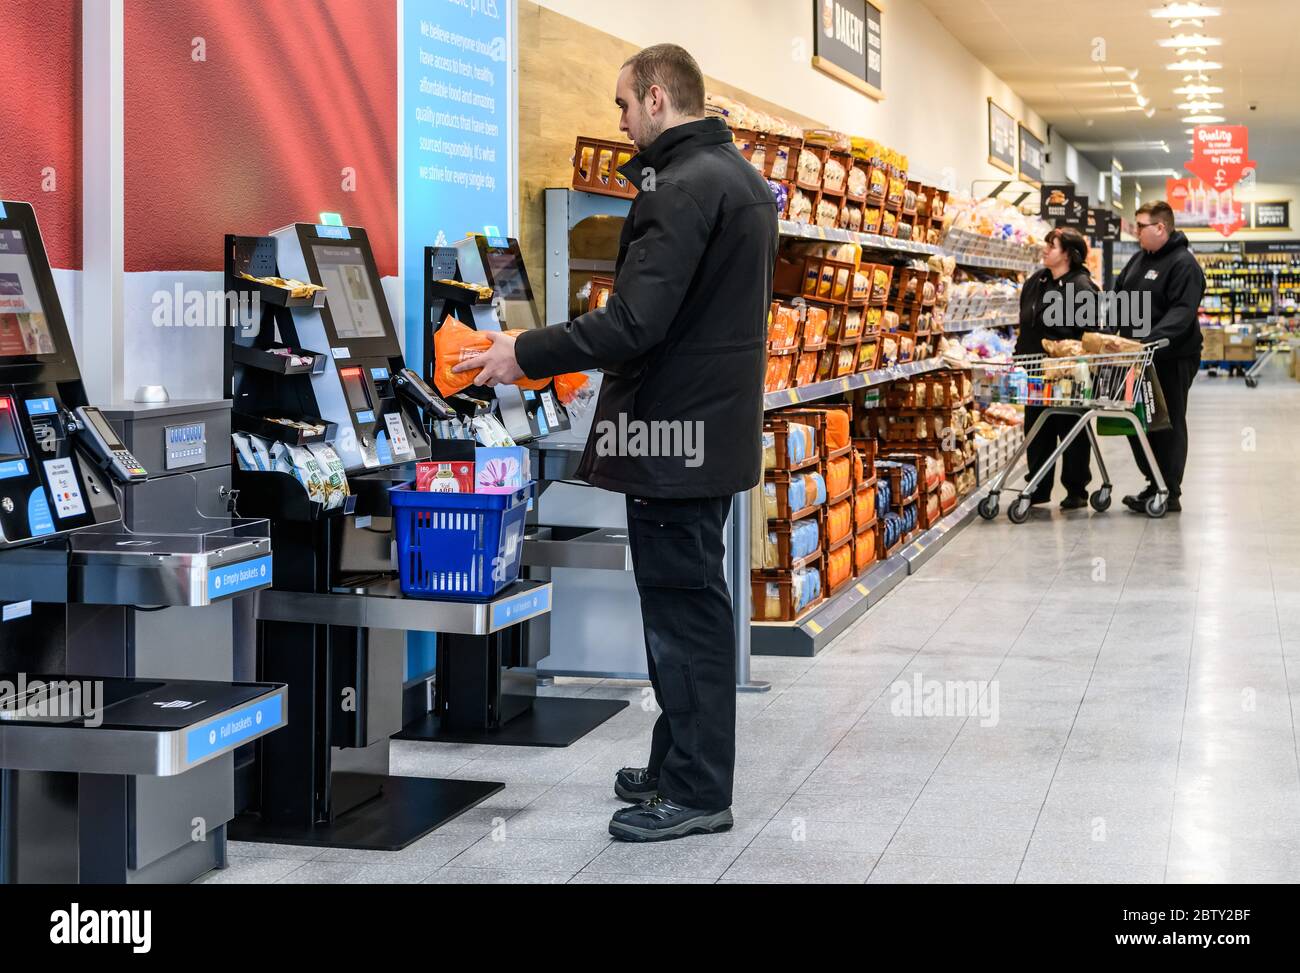 Self service checkouts in an Aldi supermarket store in Tamworth, Staffordshire, England, UK. Stock Photo